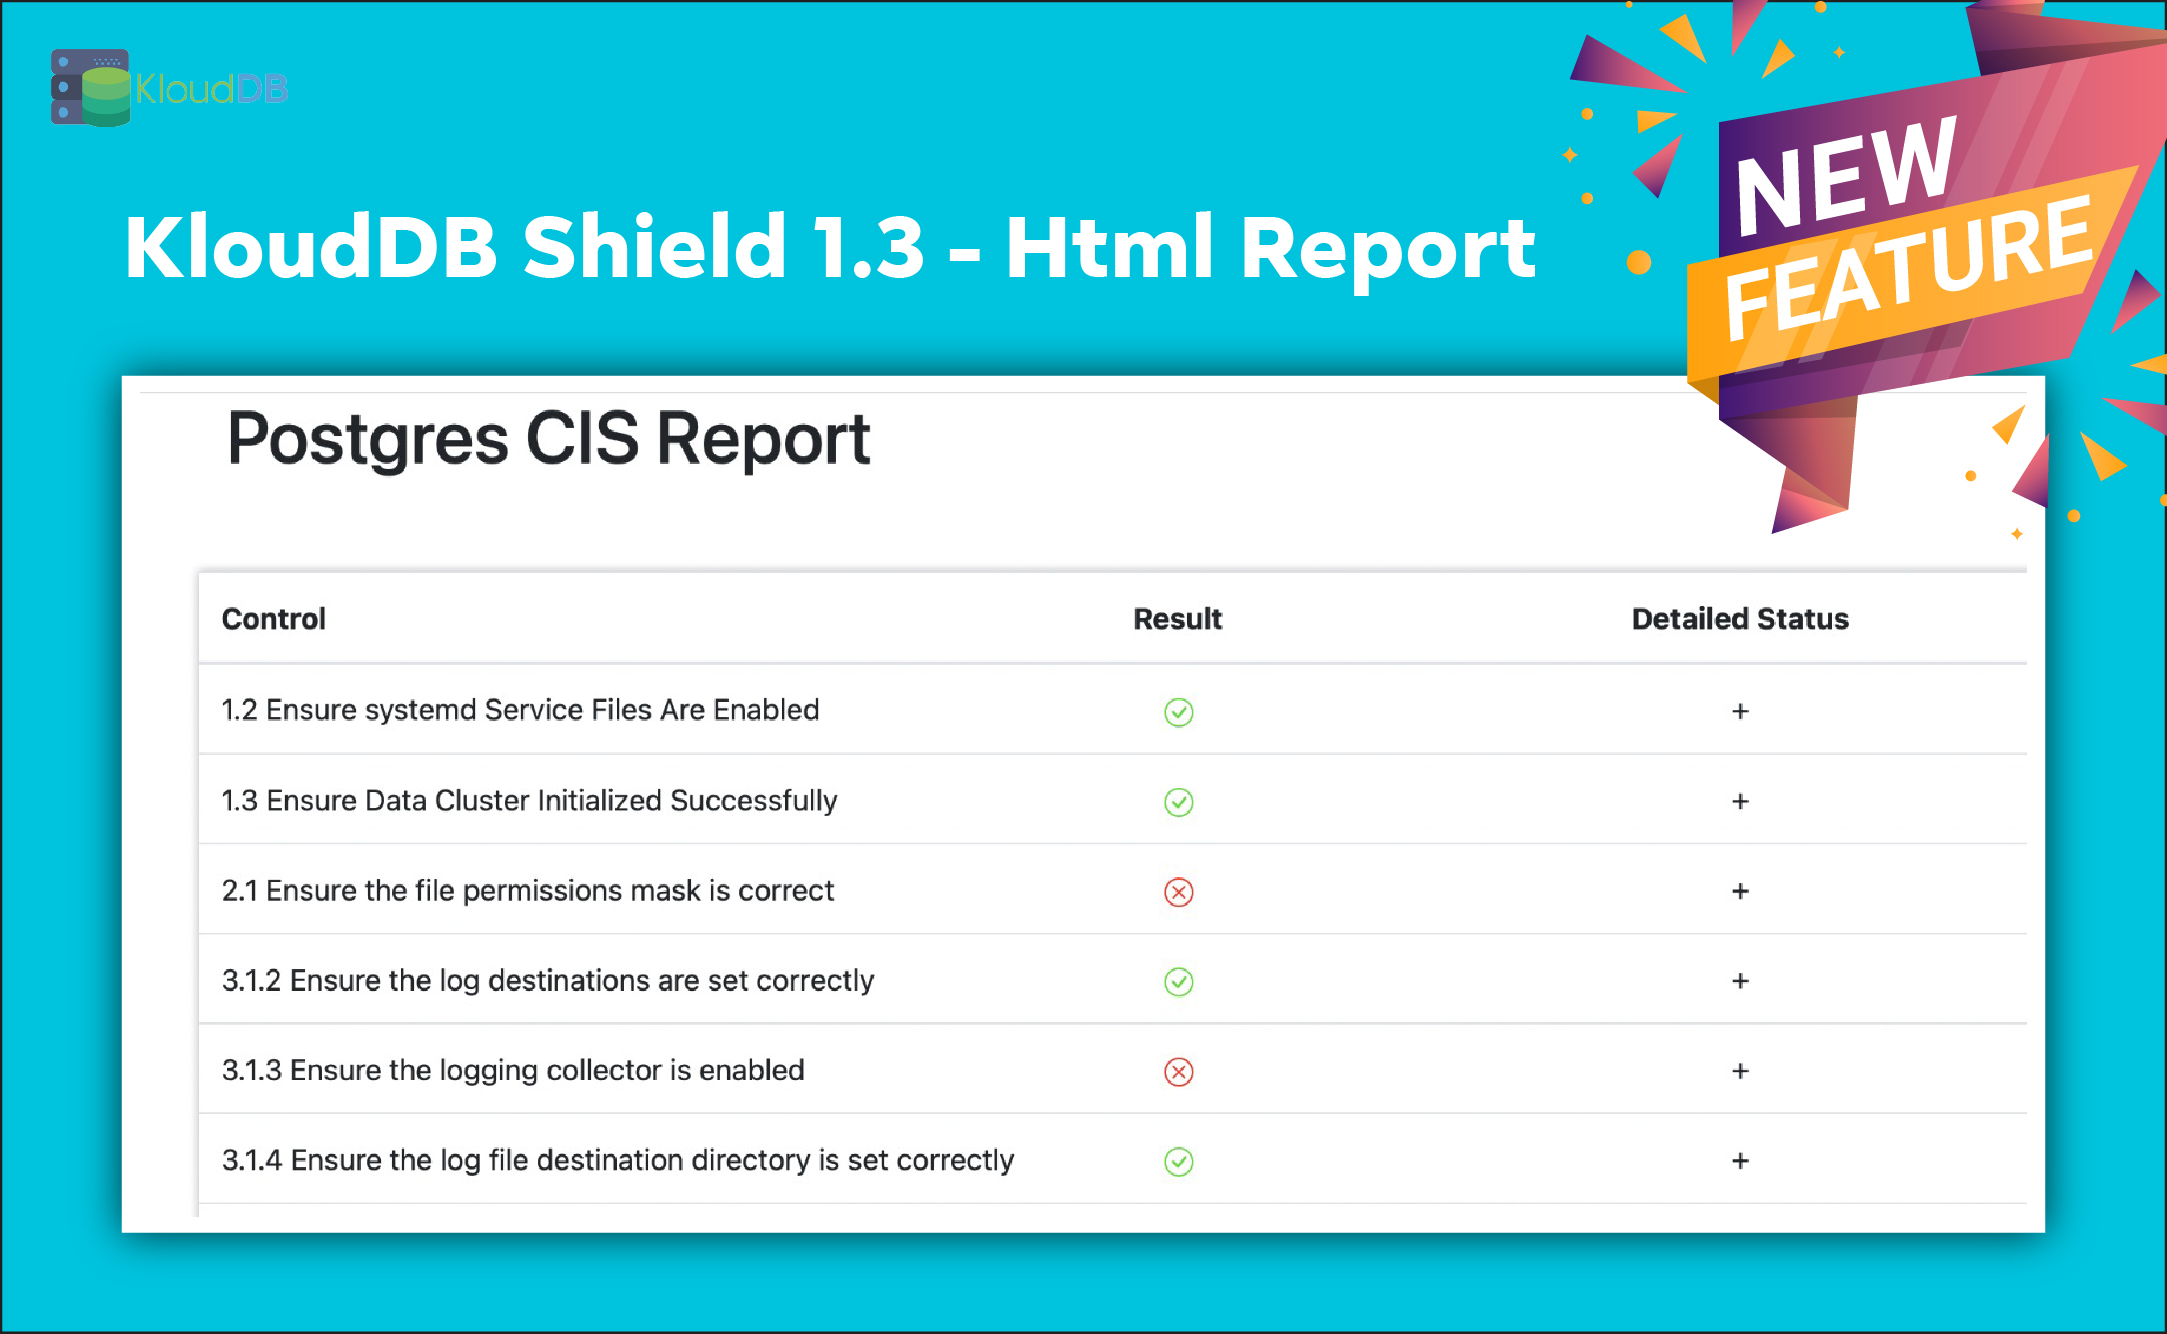 KloudDB Shield 1.3 - HTML Feature